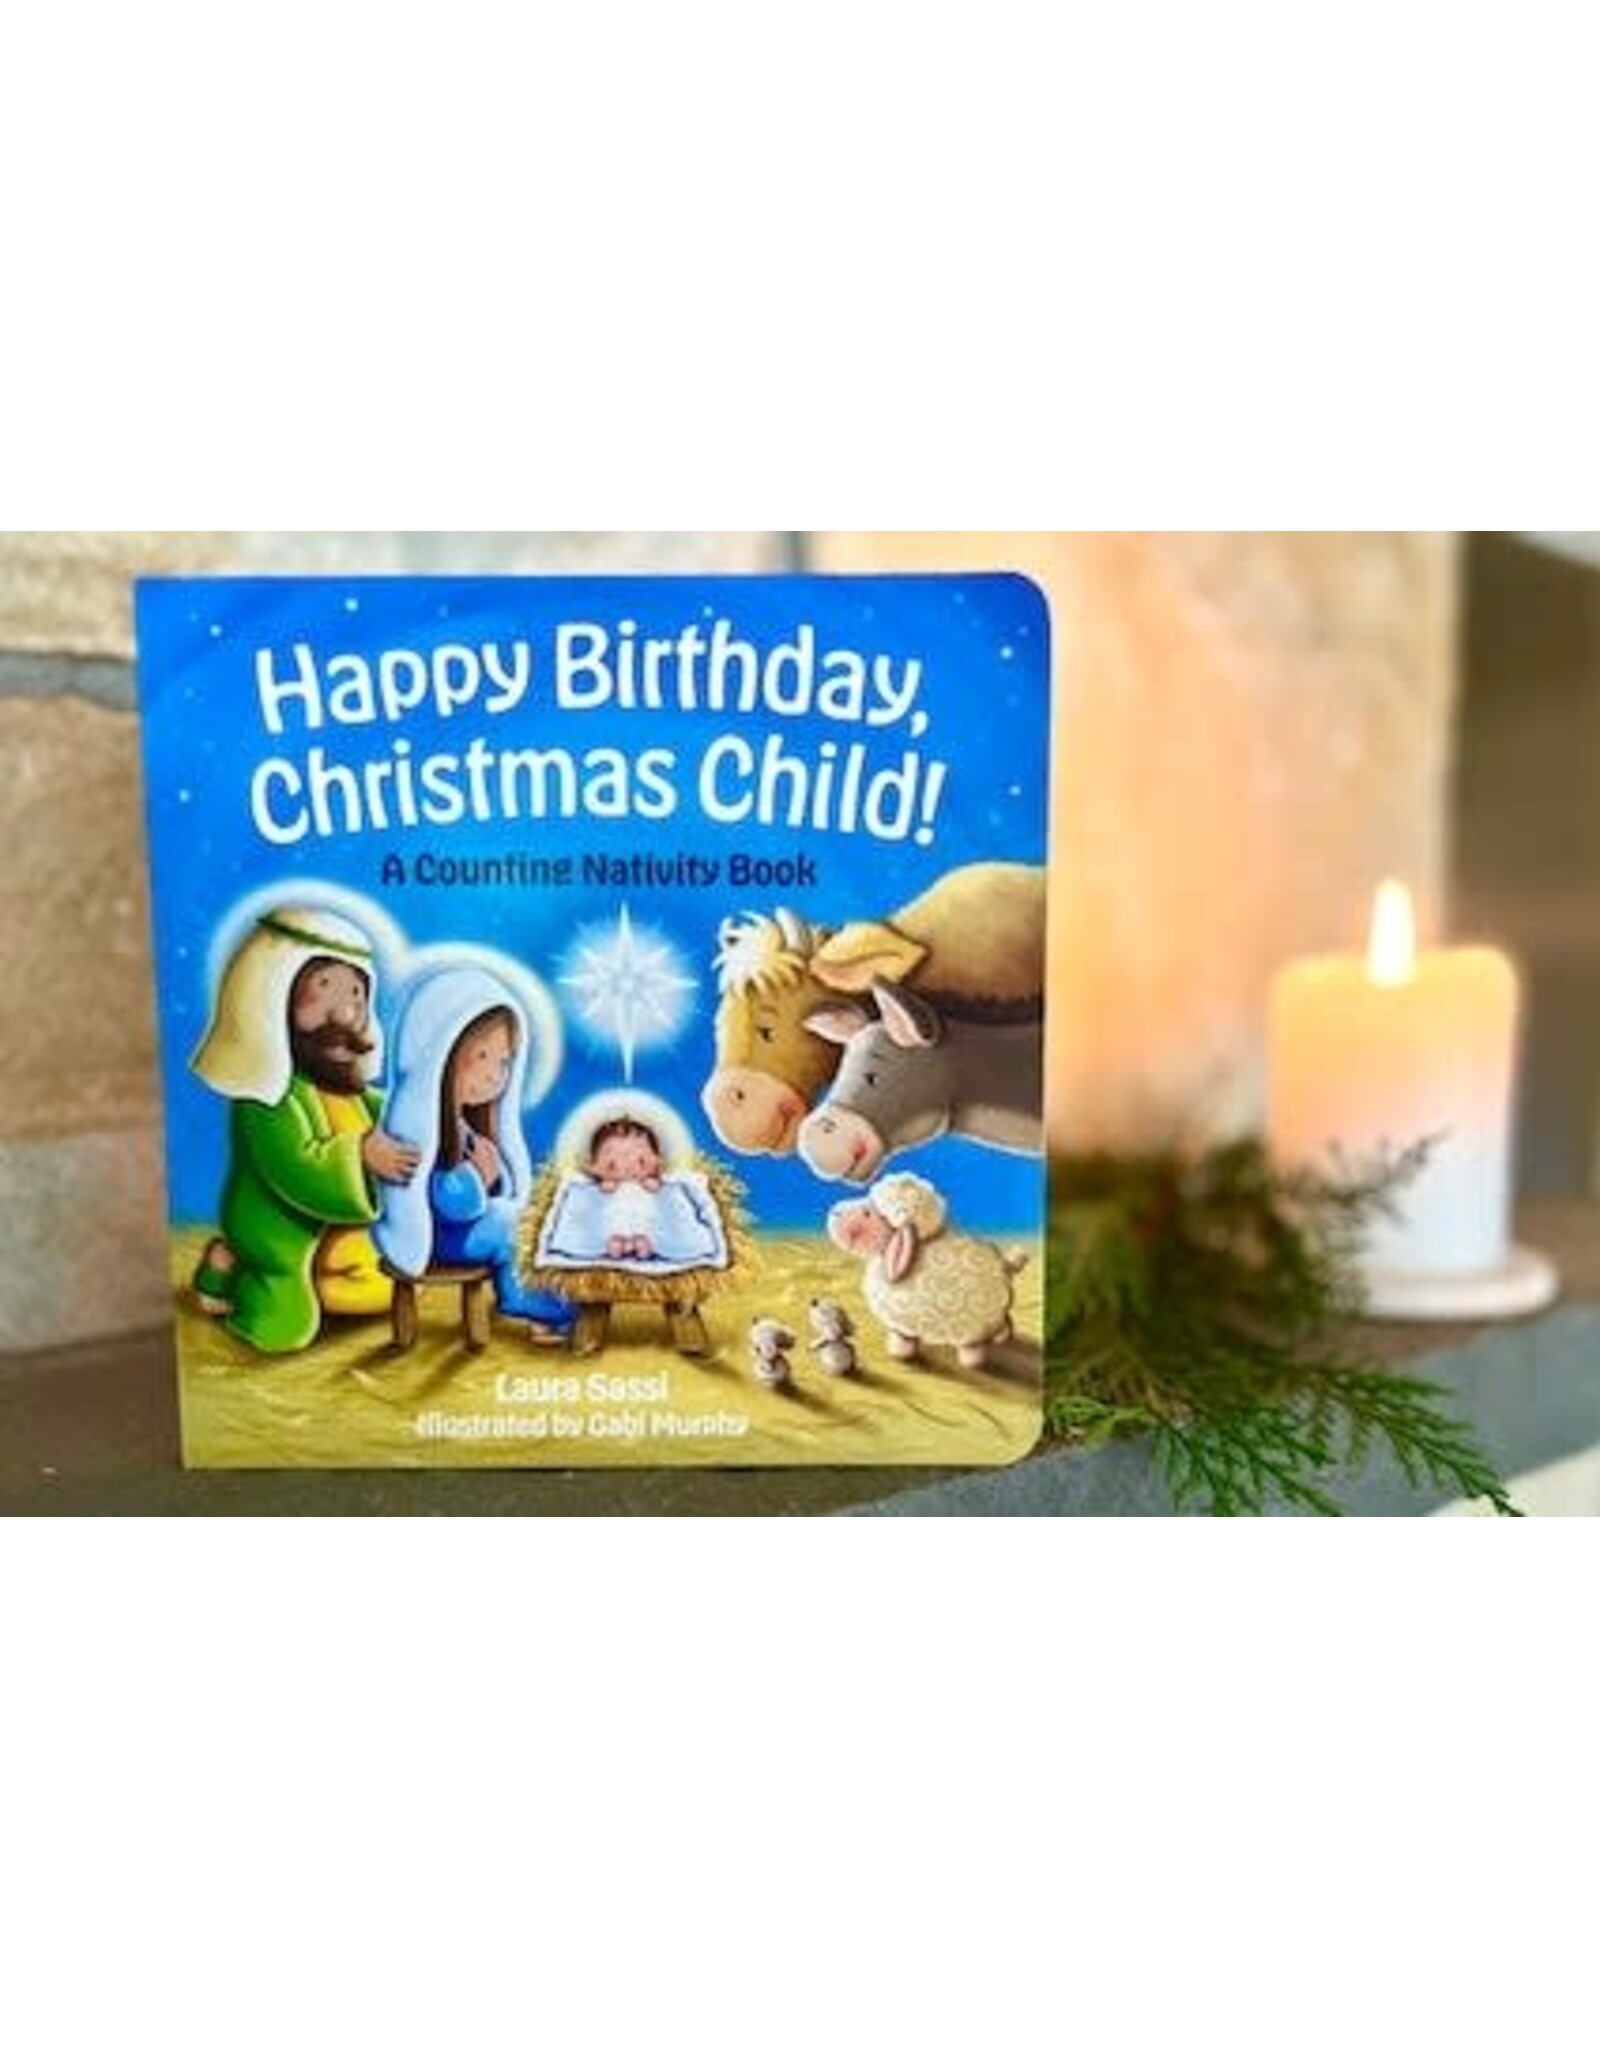 Paraclete Press Happy Birthday Christmas Child - Laura Sassi